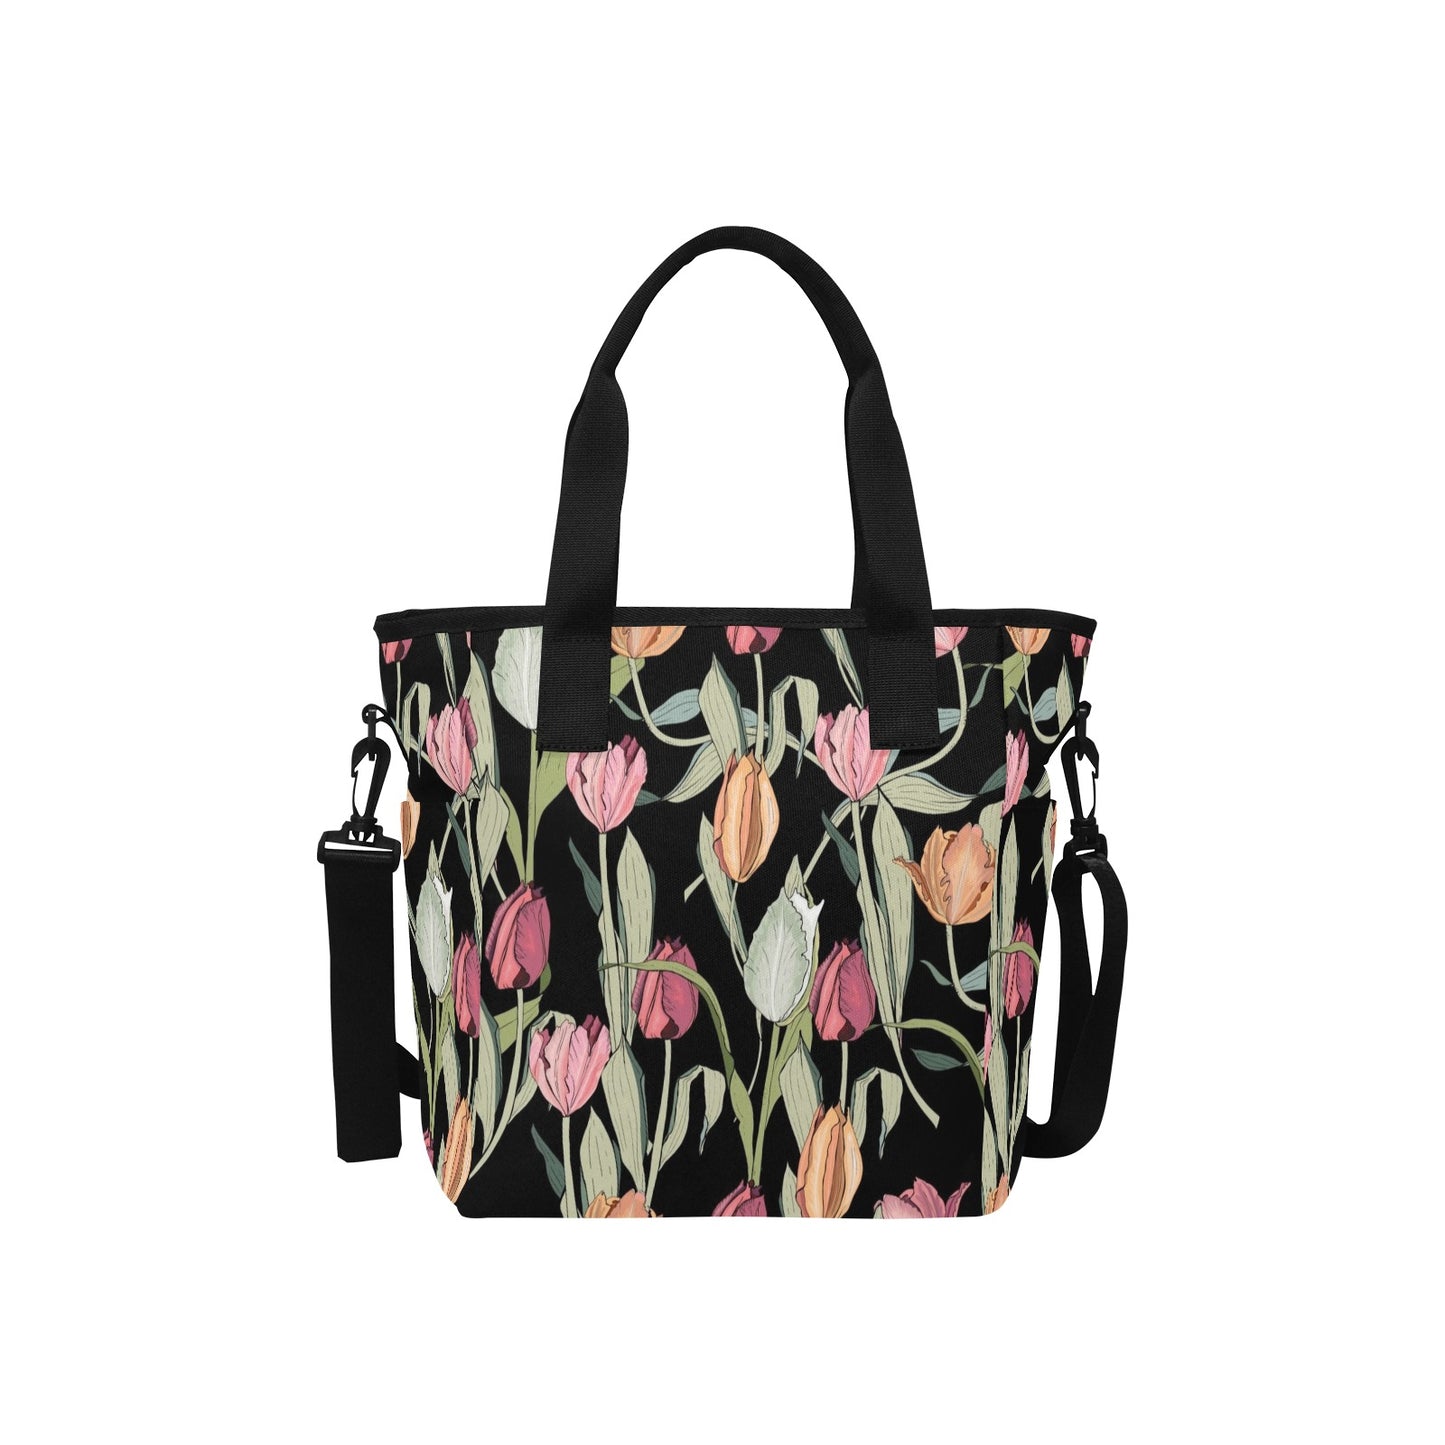 Tulips - Tote Bag with Shoulder Strap Nylon Tote Bag